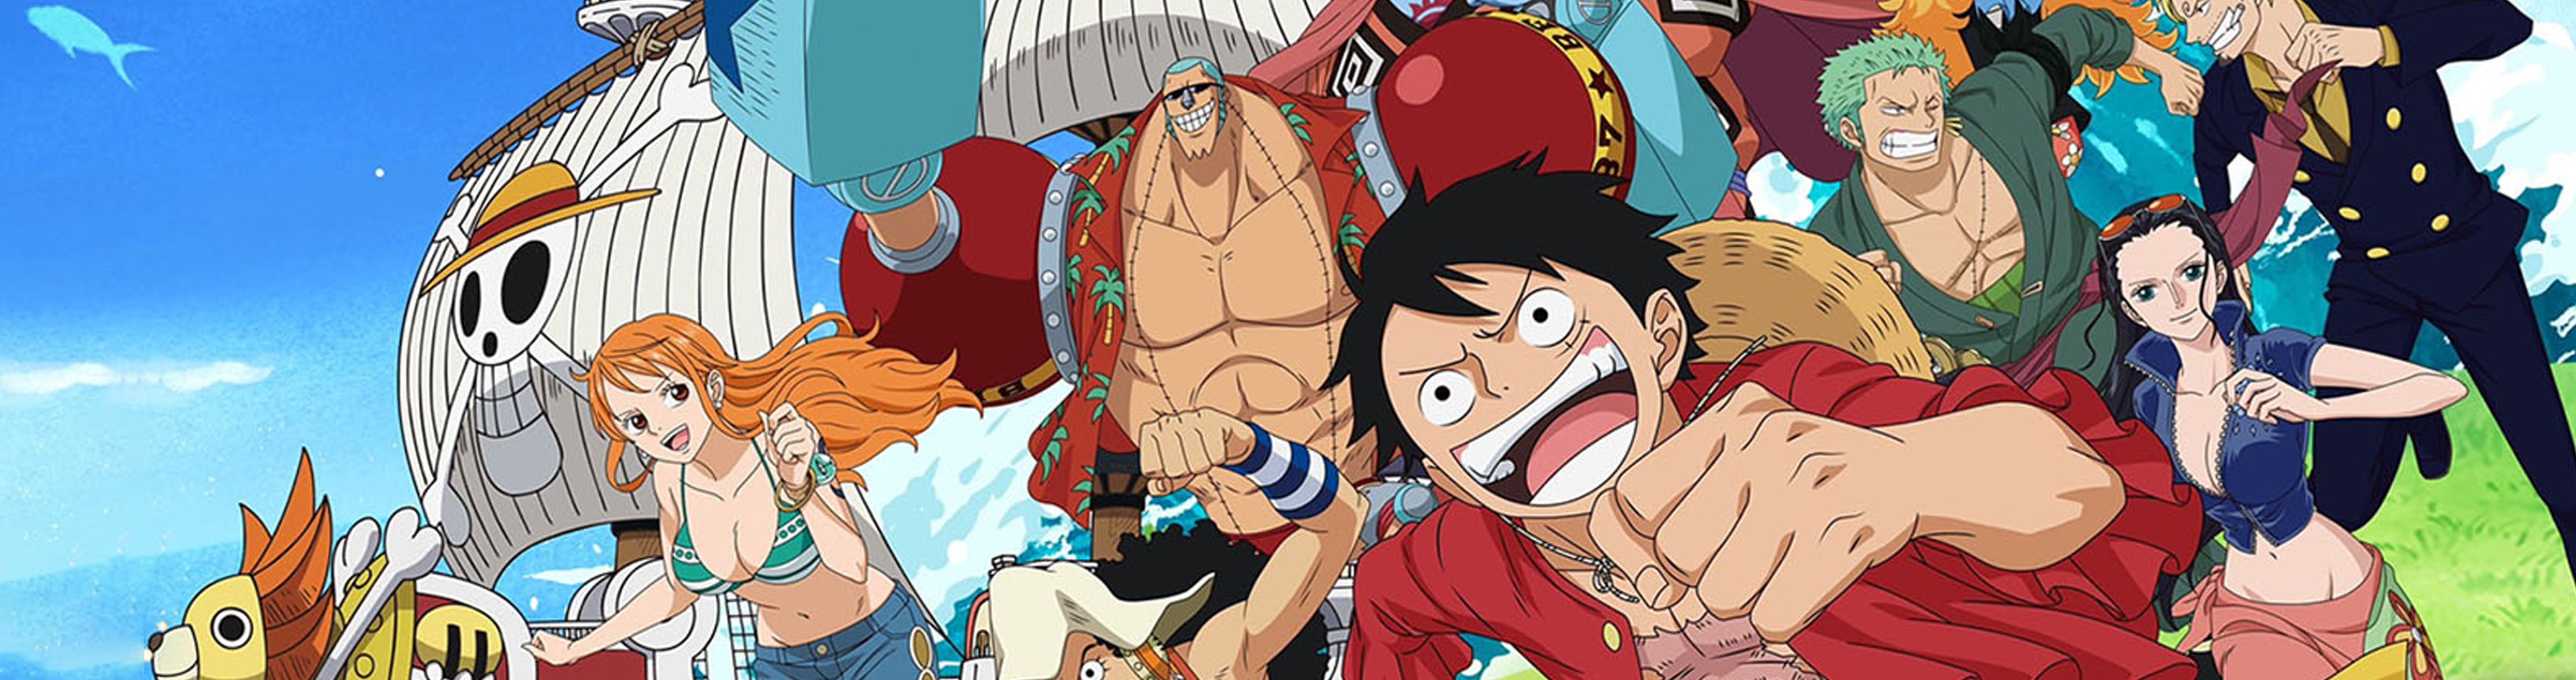 خرید محصولات وان پیس (One Piece)